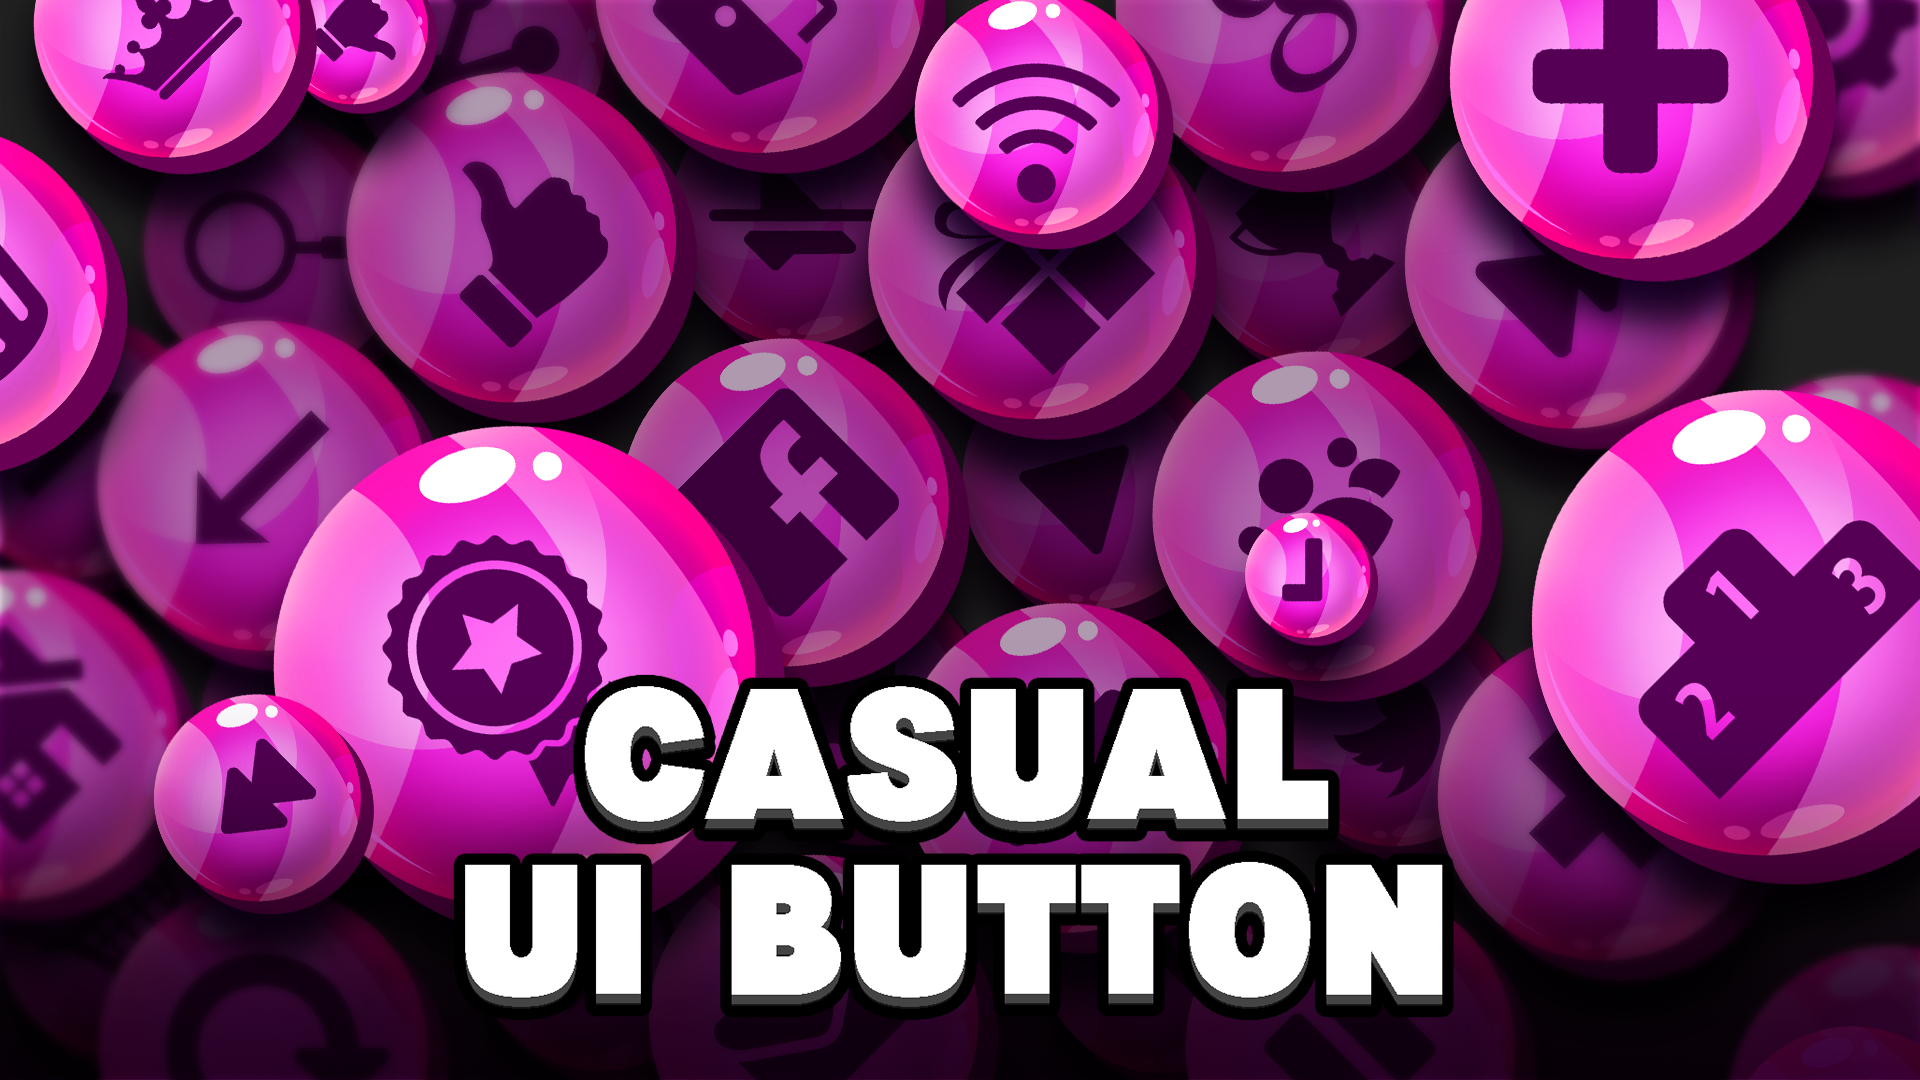 Casual UI Button #8